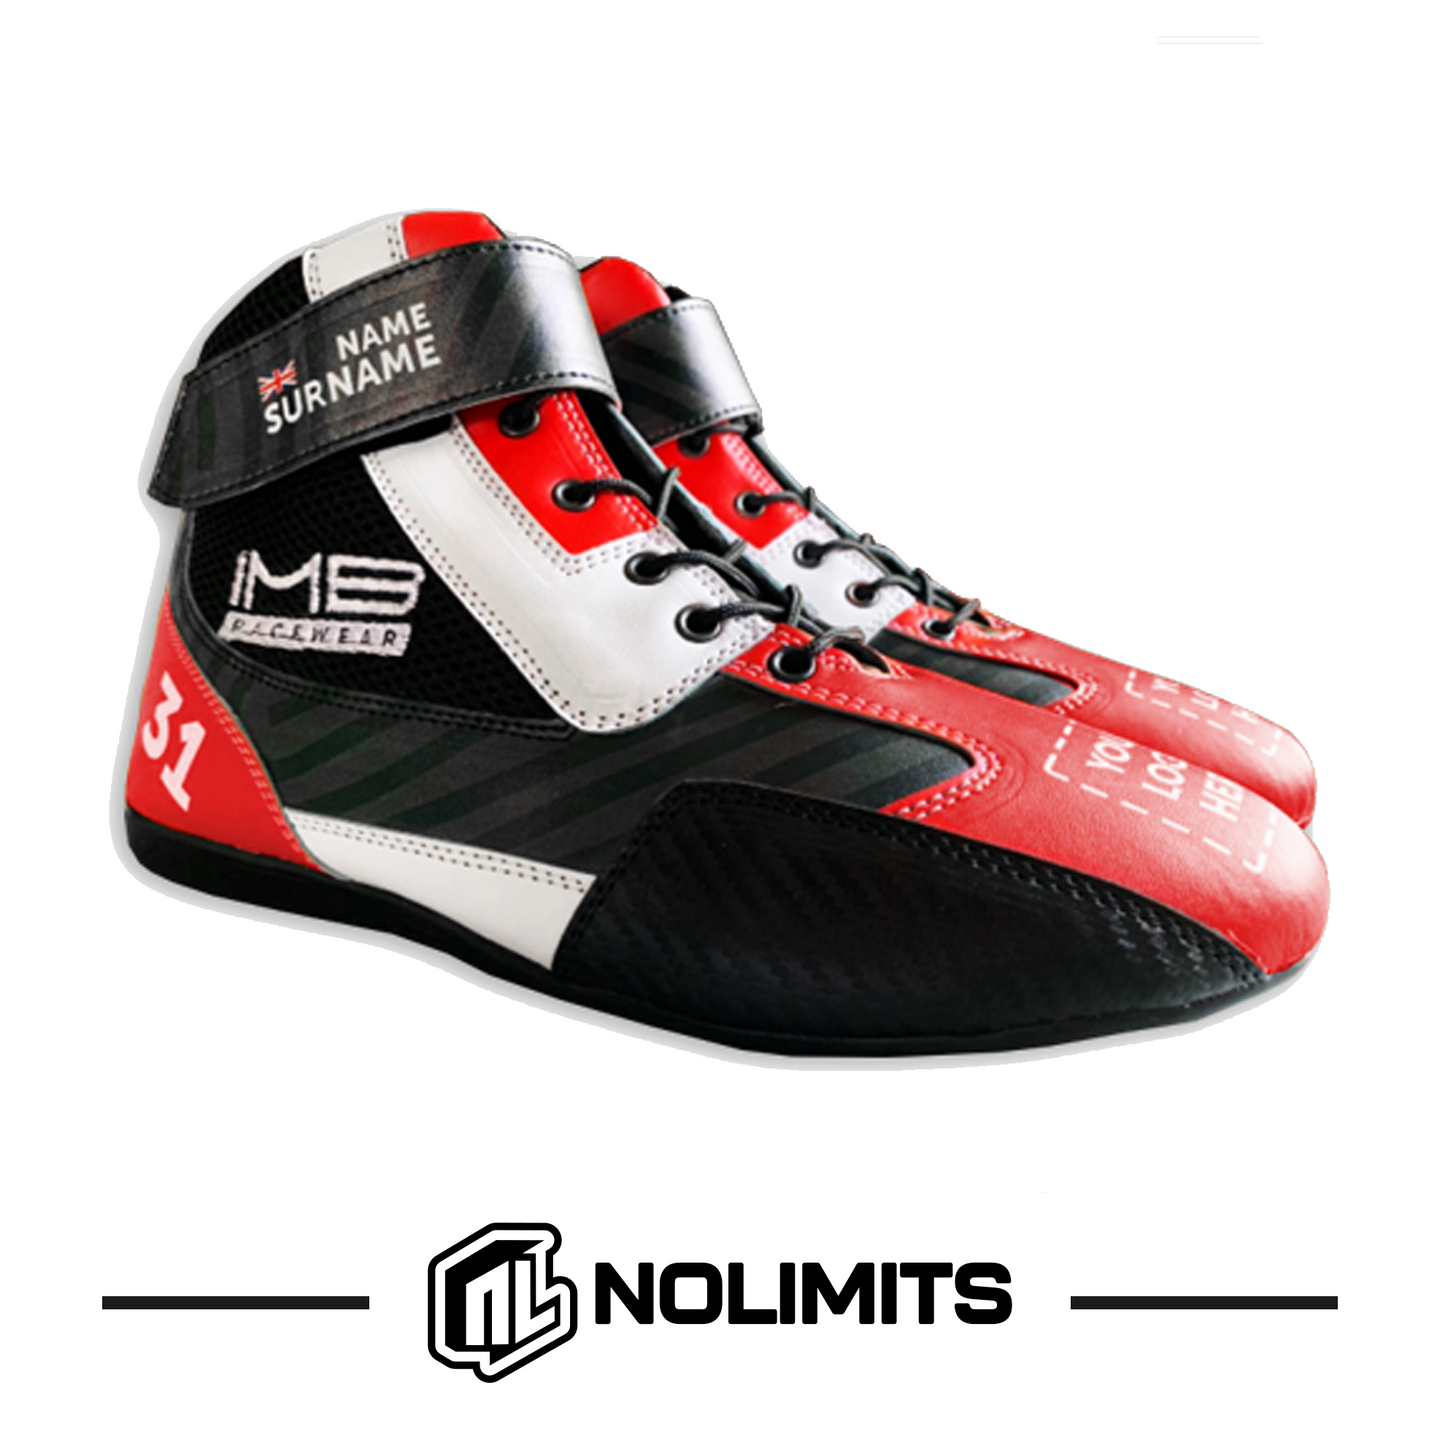 The NoLimits SRB-1 Sim Racing Boots